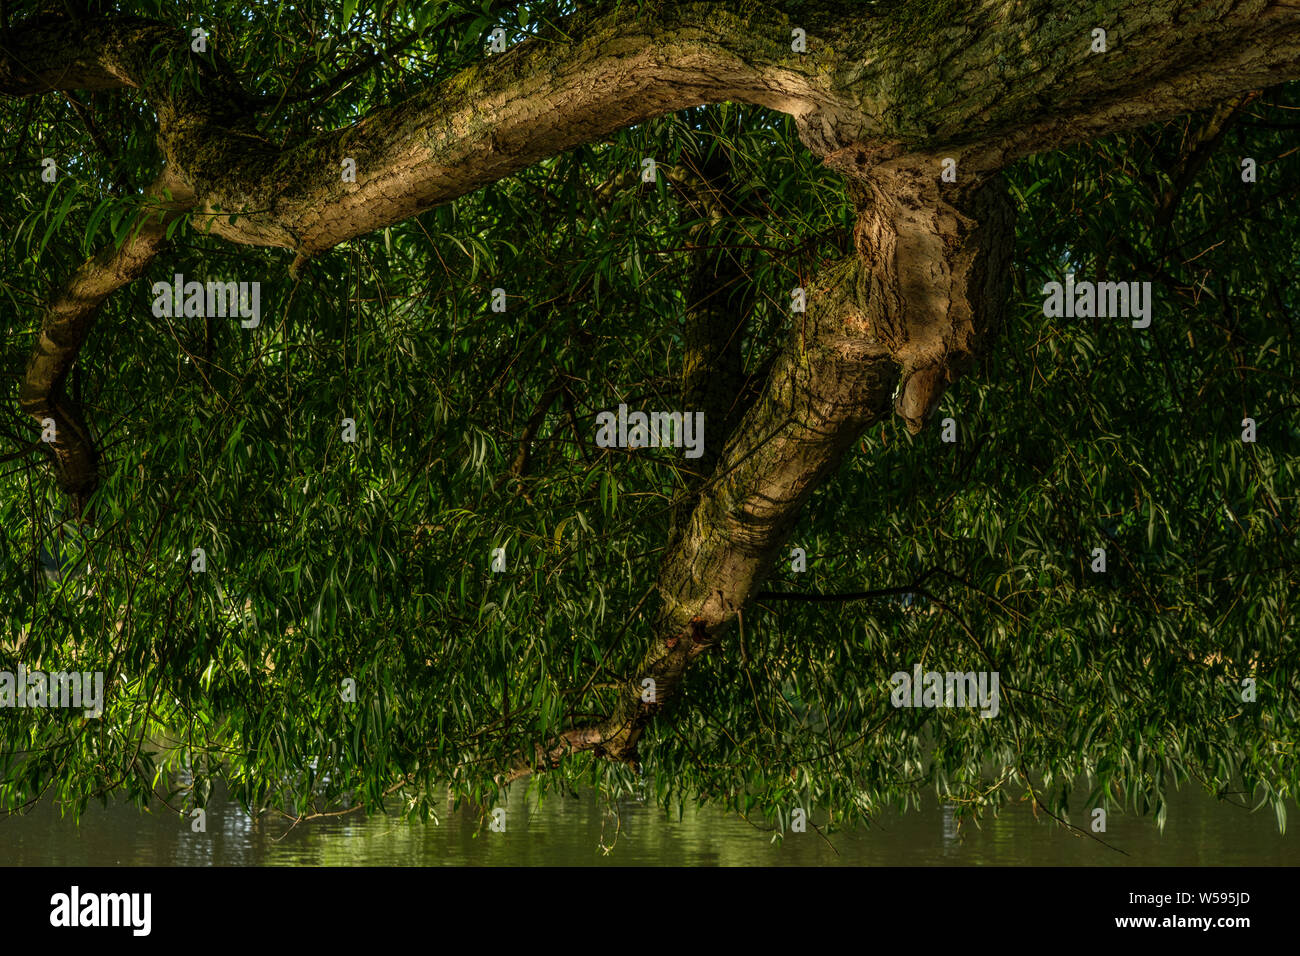 https://c8.alamy.com/comp/W595JD/light-reflections-from-water-to-underside-of-willow-tree-limbs-bushy-park-hampton-london-england-uk-W595JD.jpg